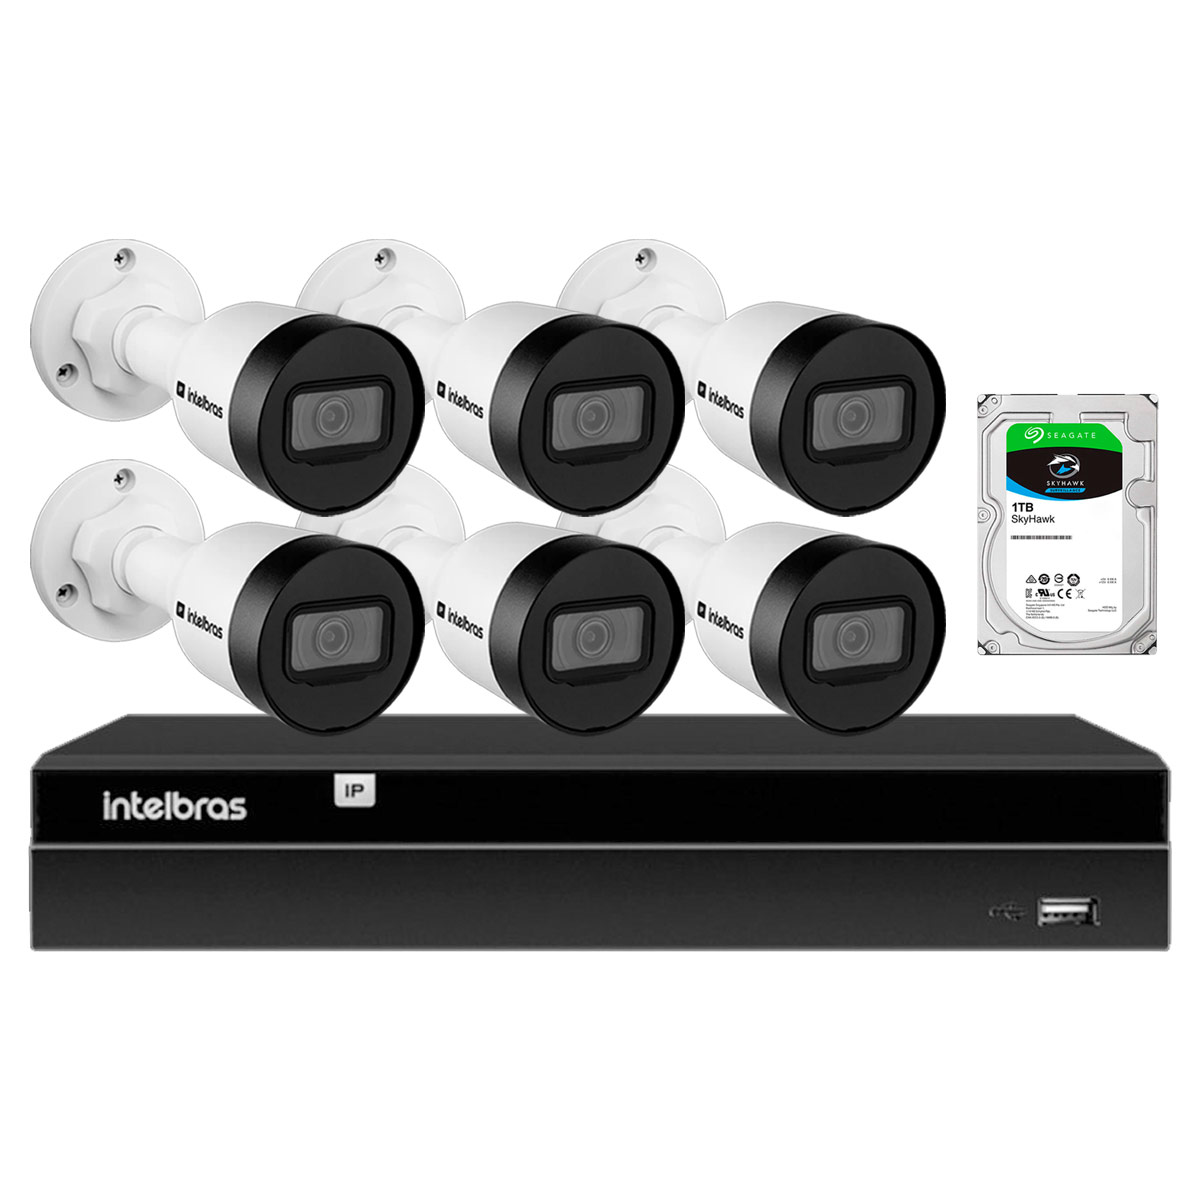 kit-6-cameras-de-seguranca-full-hd-intelbras-vhd-1220-b-g6-dvr-intelbras-full-hd-mhdx-3108-de-8-canais-acessorios